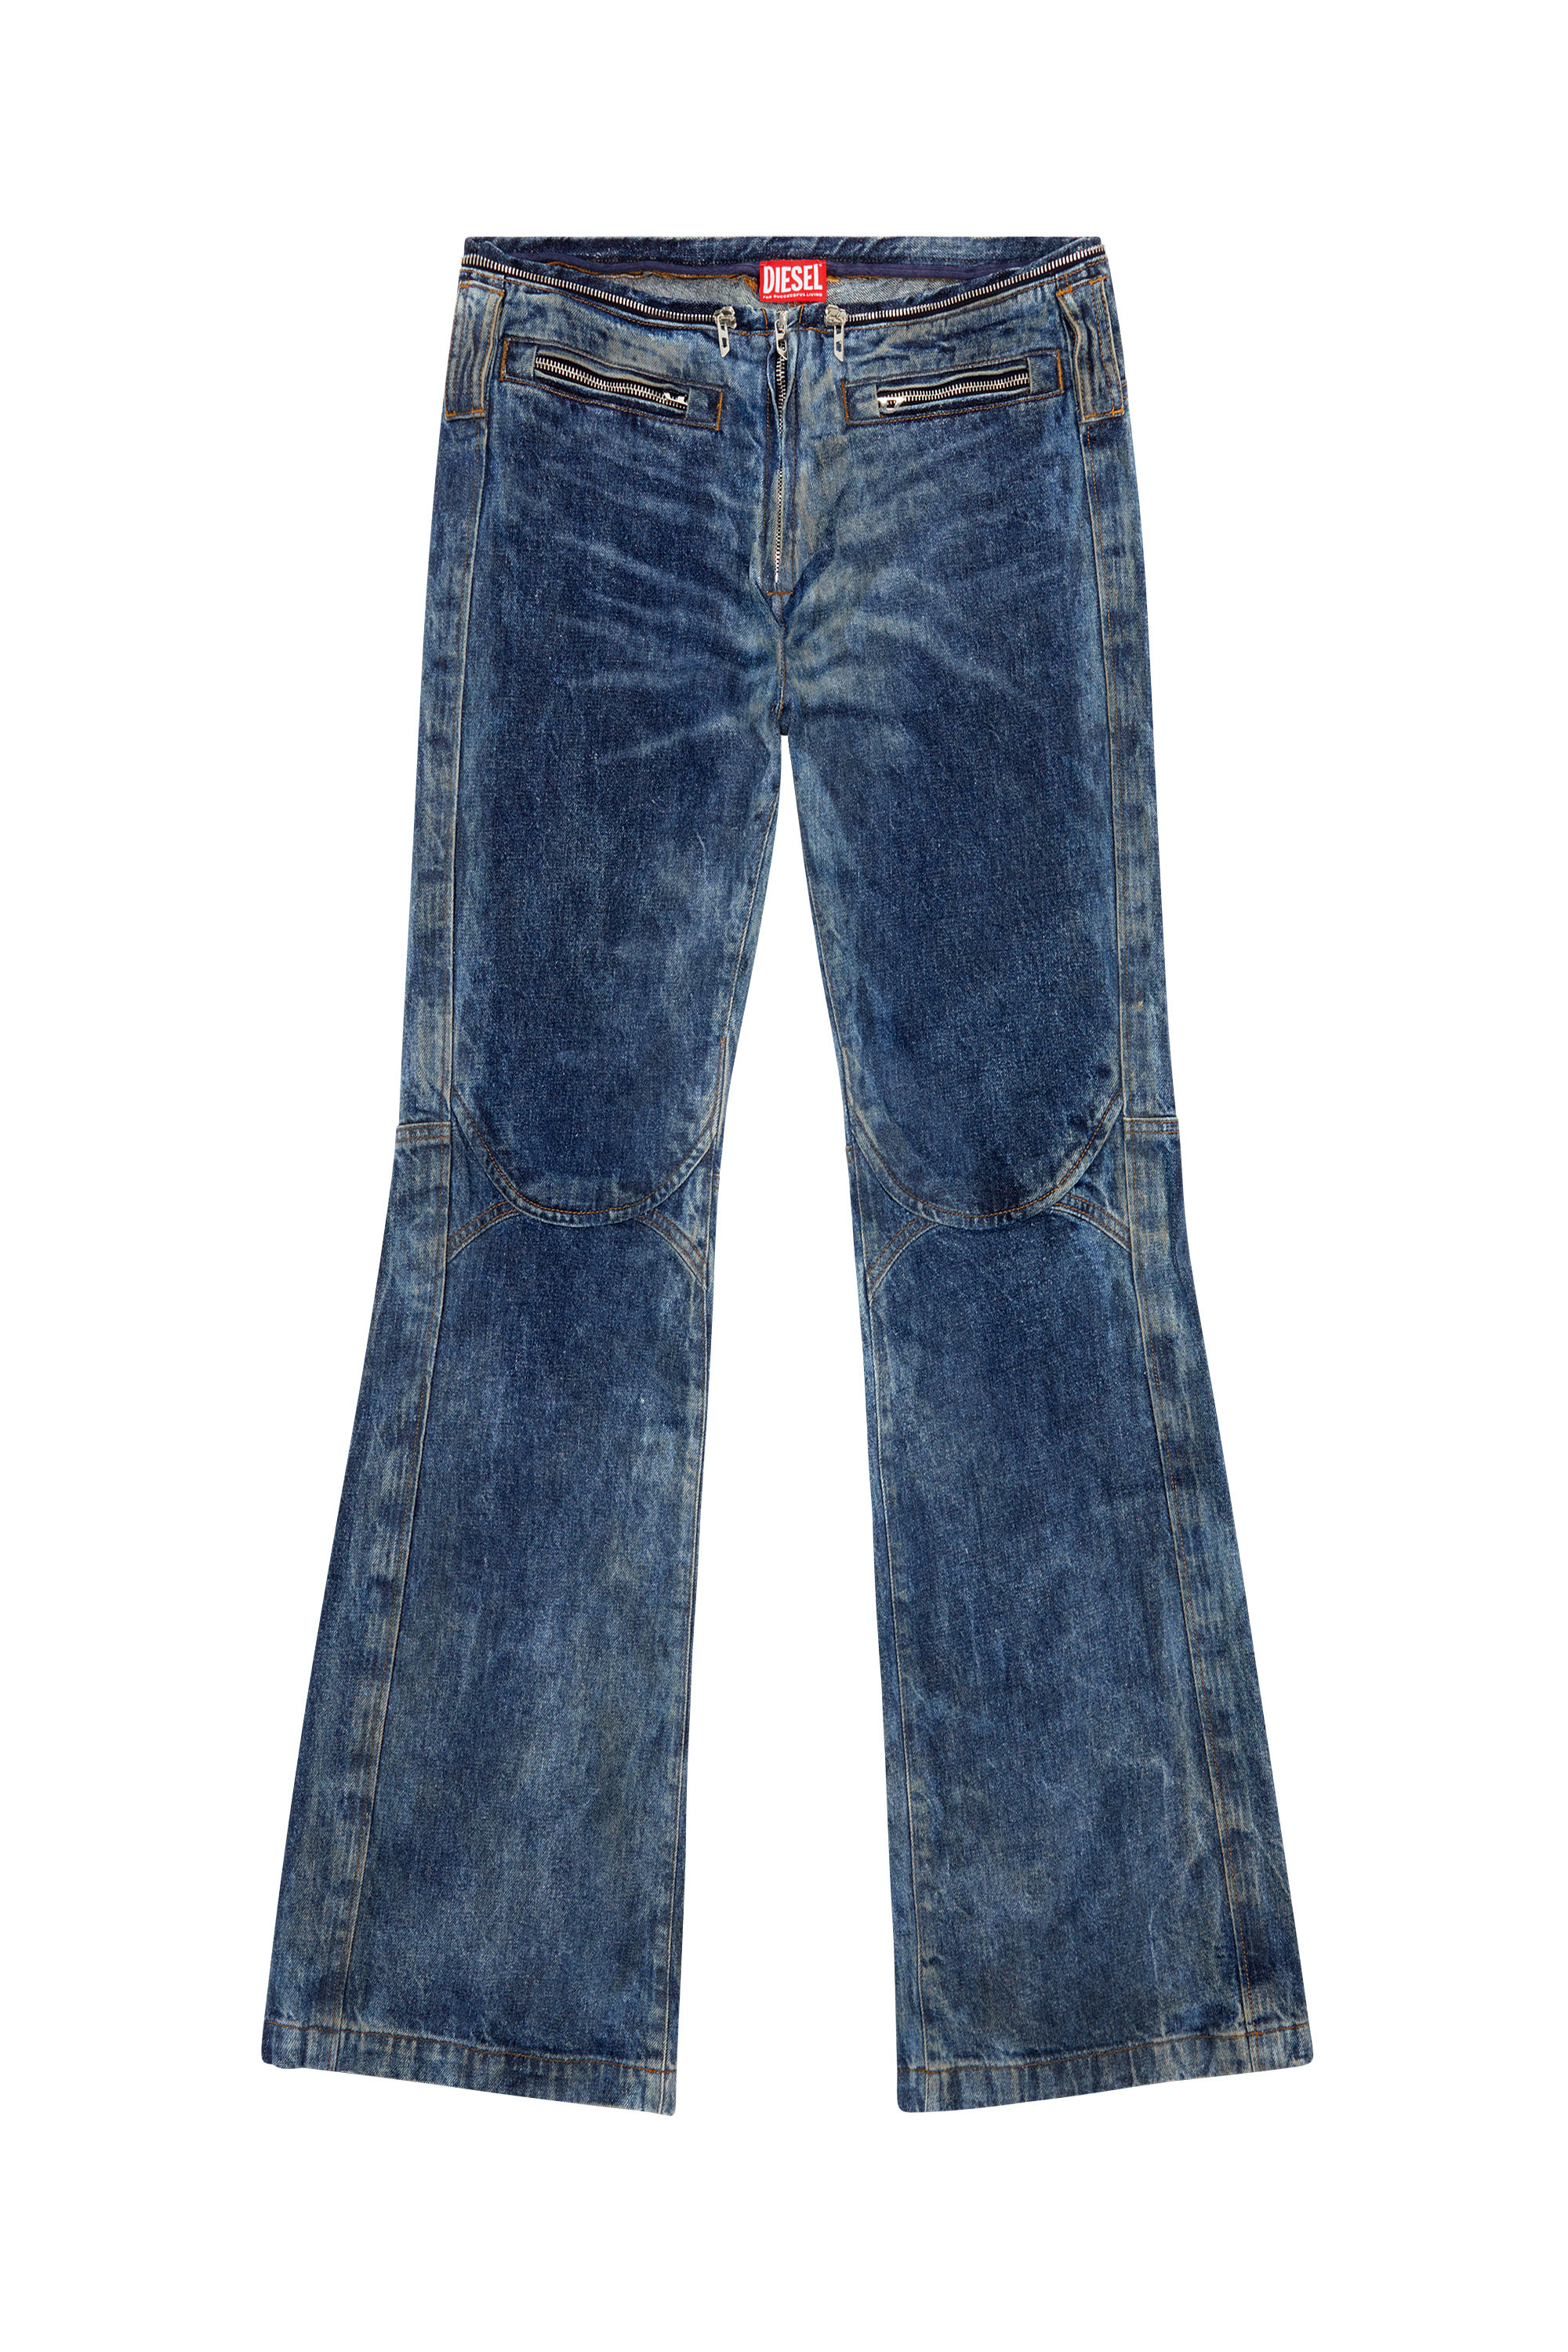 Diesel - Straight Jeans D-Gen 0PGAX, Hombre Straight Jeans - D-Gen in Azul marino - Image 6